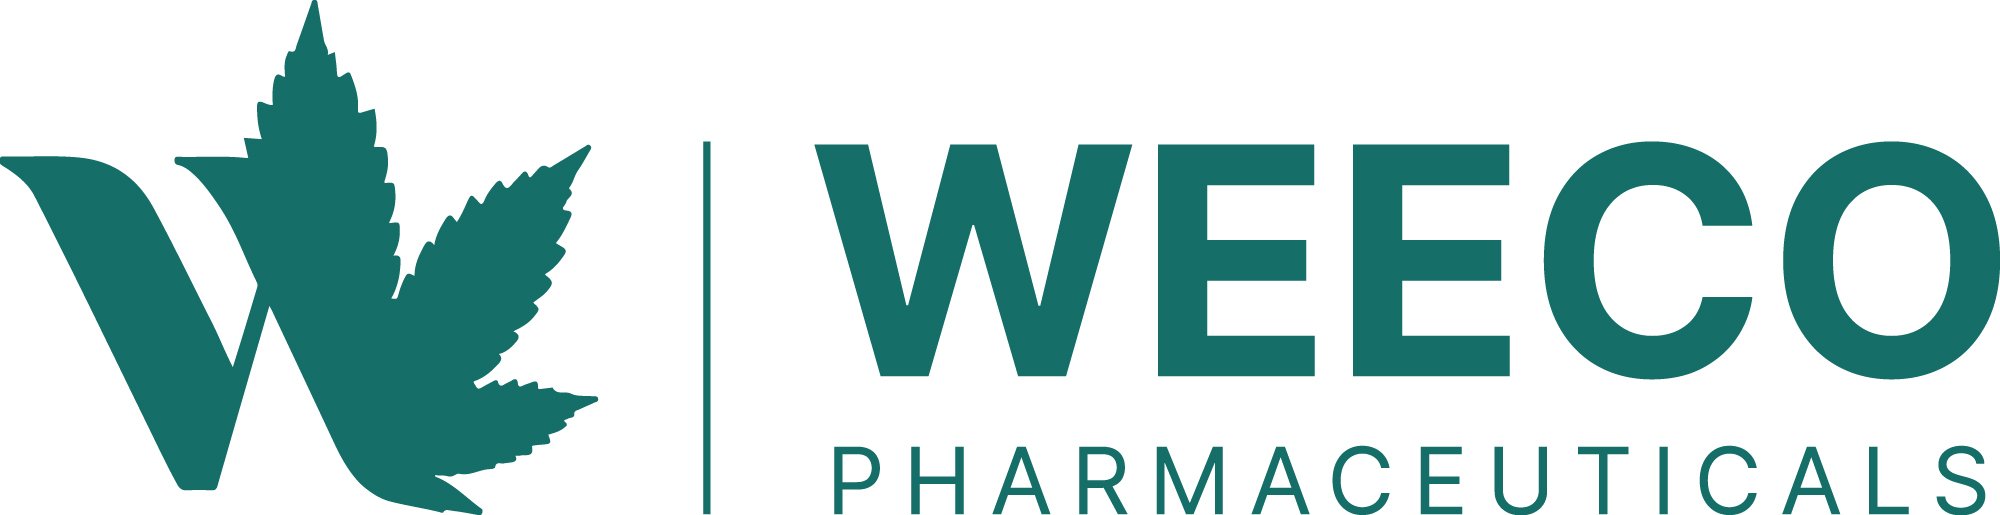 WEECO Pharma.jpg